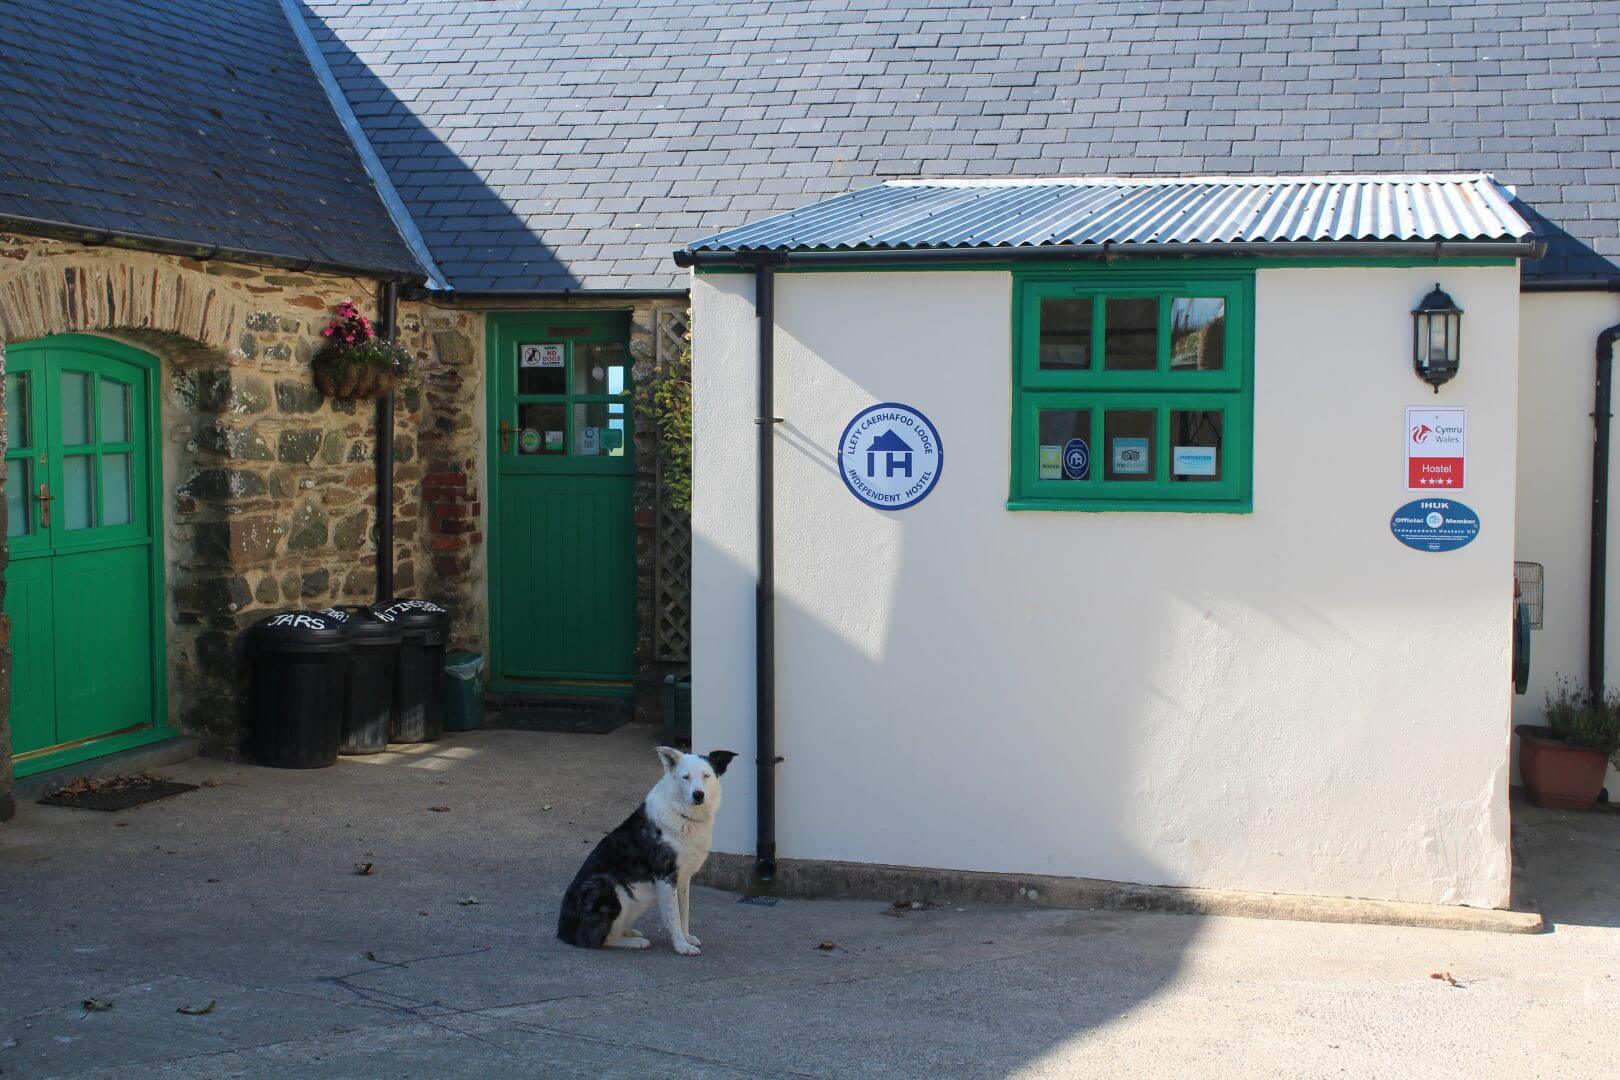 caerhafod lodge dog friendly accommodation in pembrokeshire